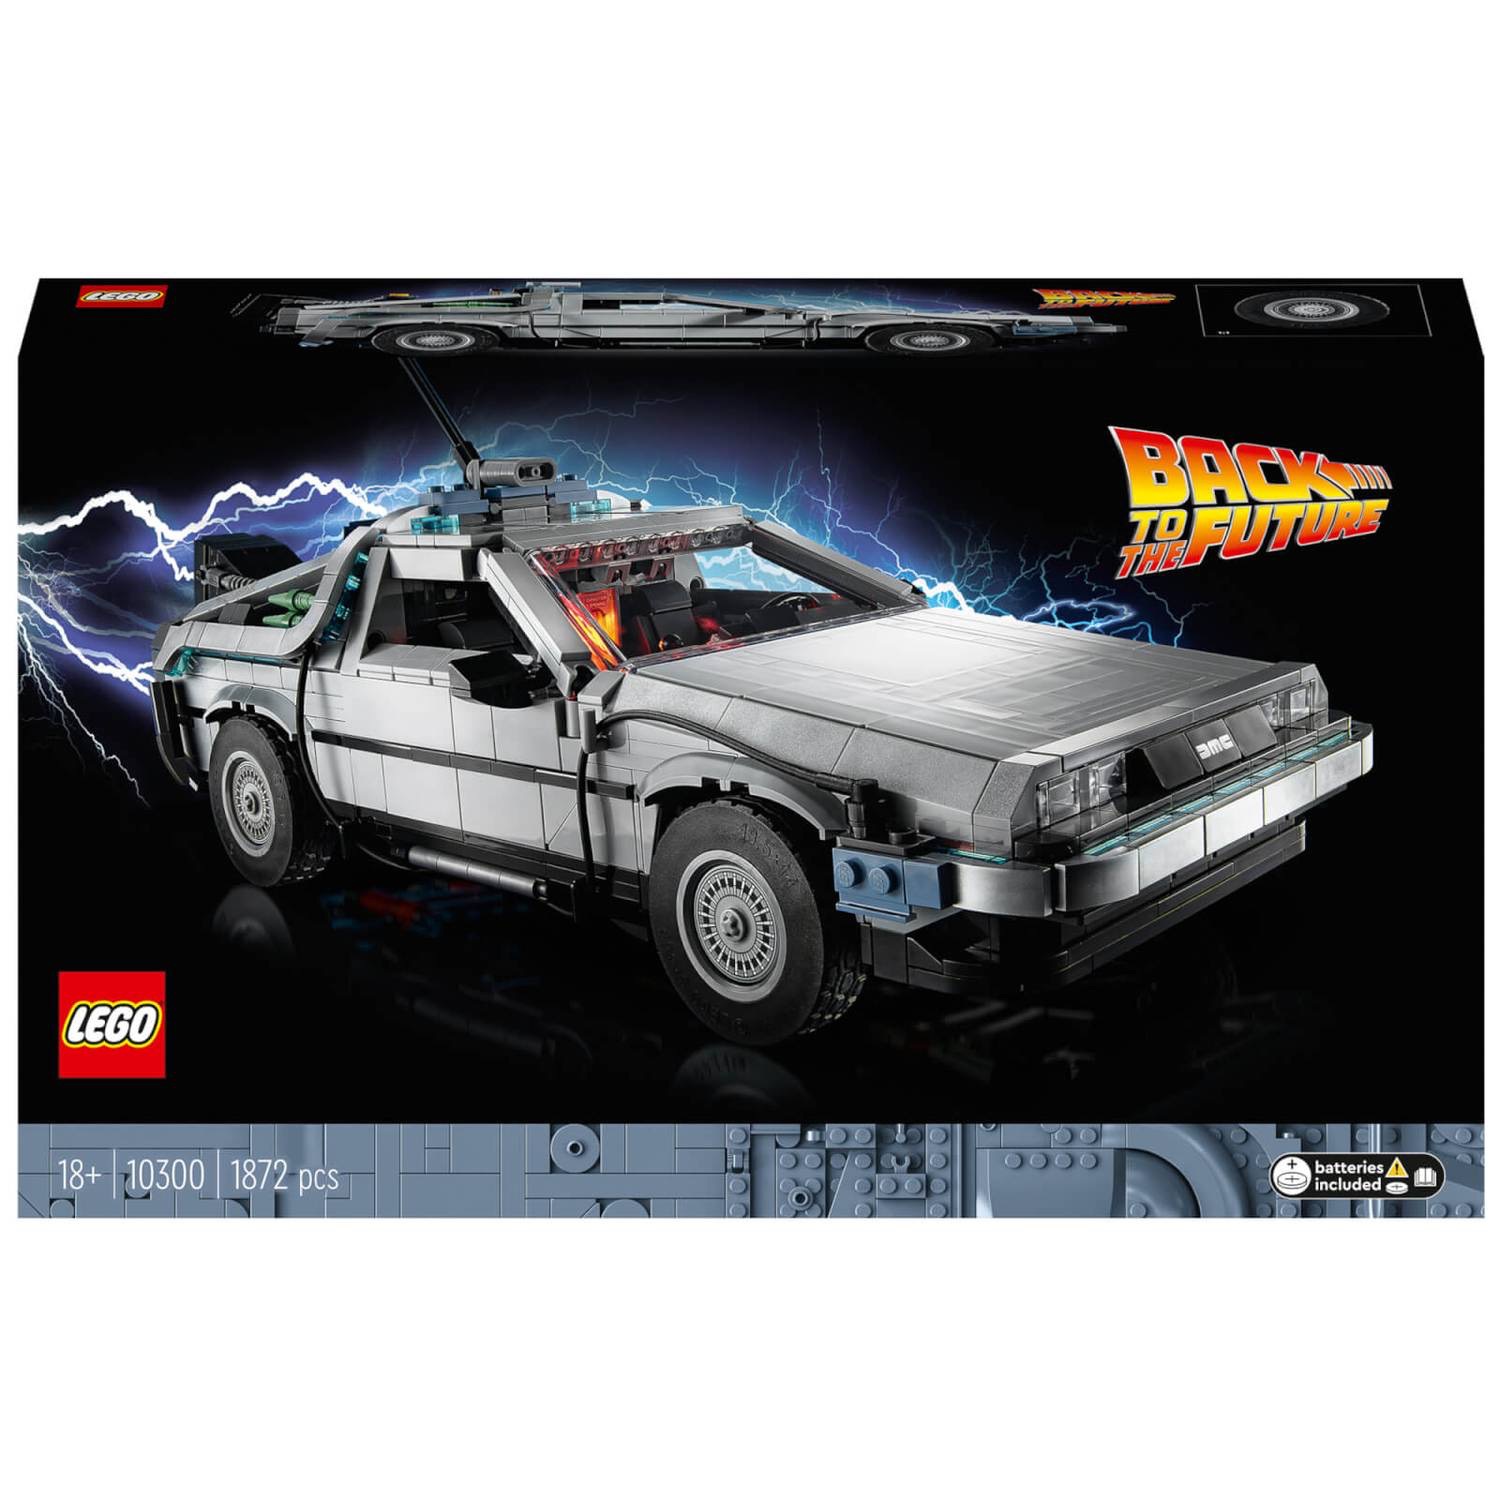 LEGO Icons Back to the Future Time Machine Car Set (10300) Toys - Zavvi US乐高回到未来时光机